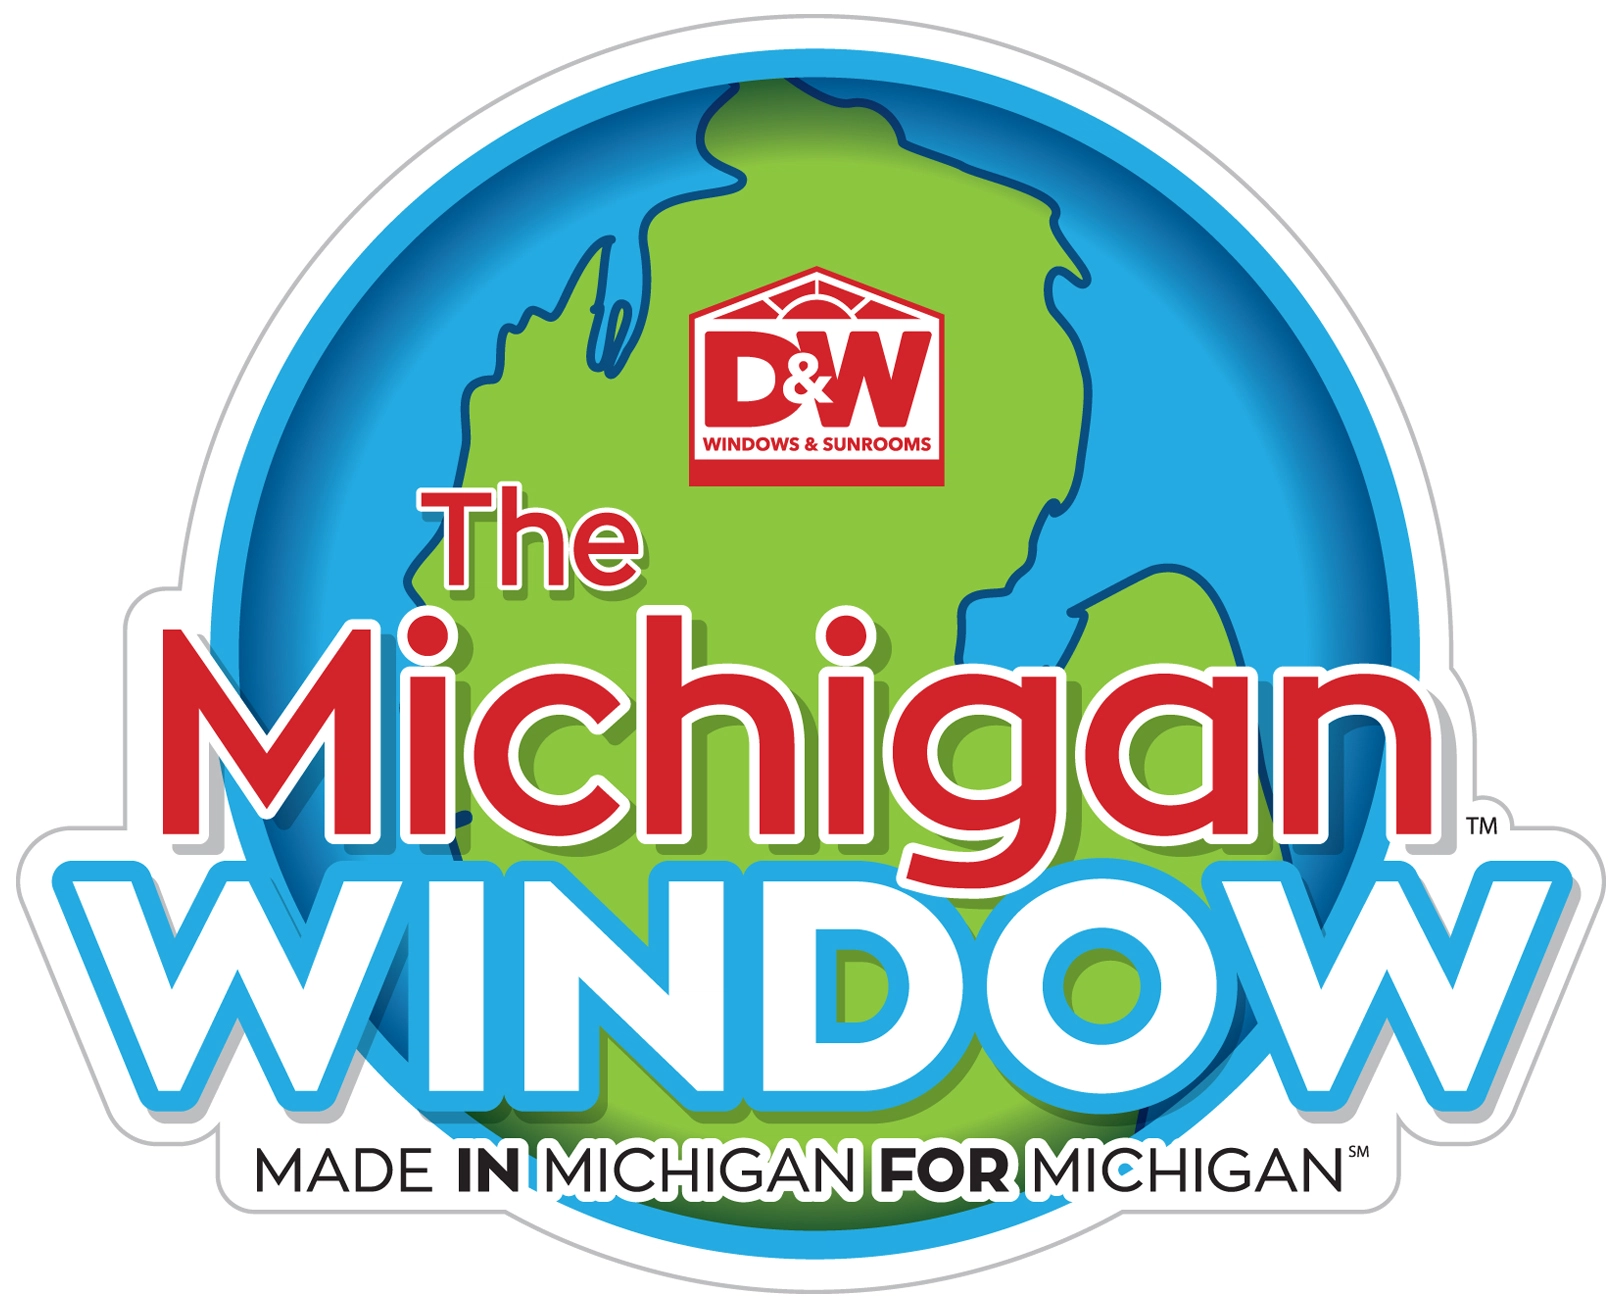 D&W Windows & Sunrooms Logo